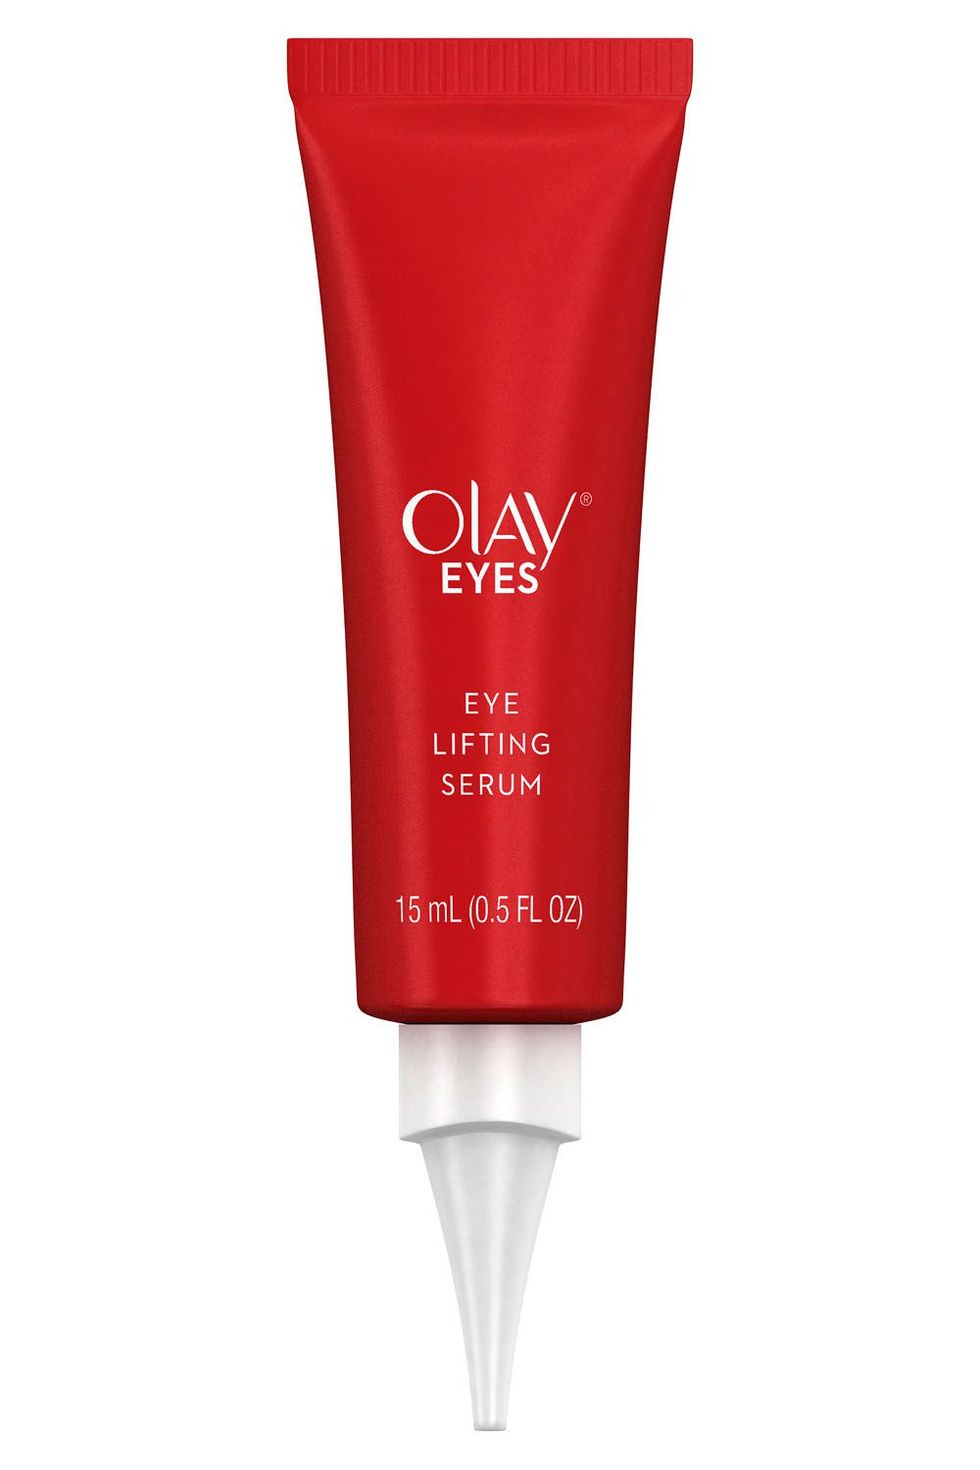 Olay Eyes Eye Lifting Serum